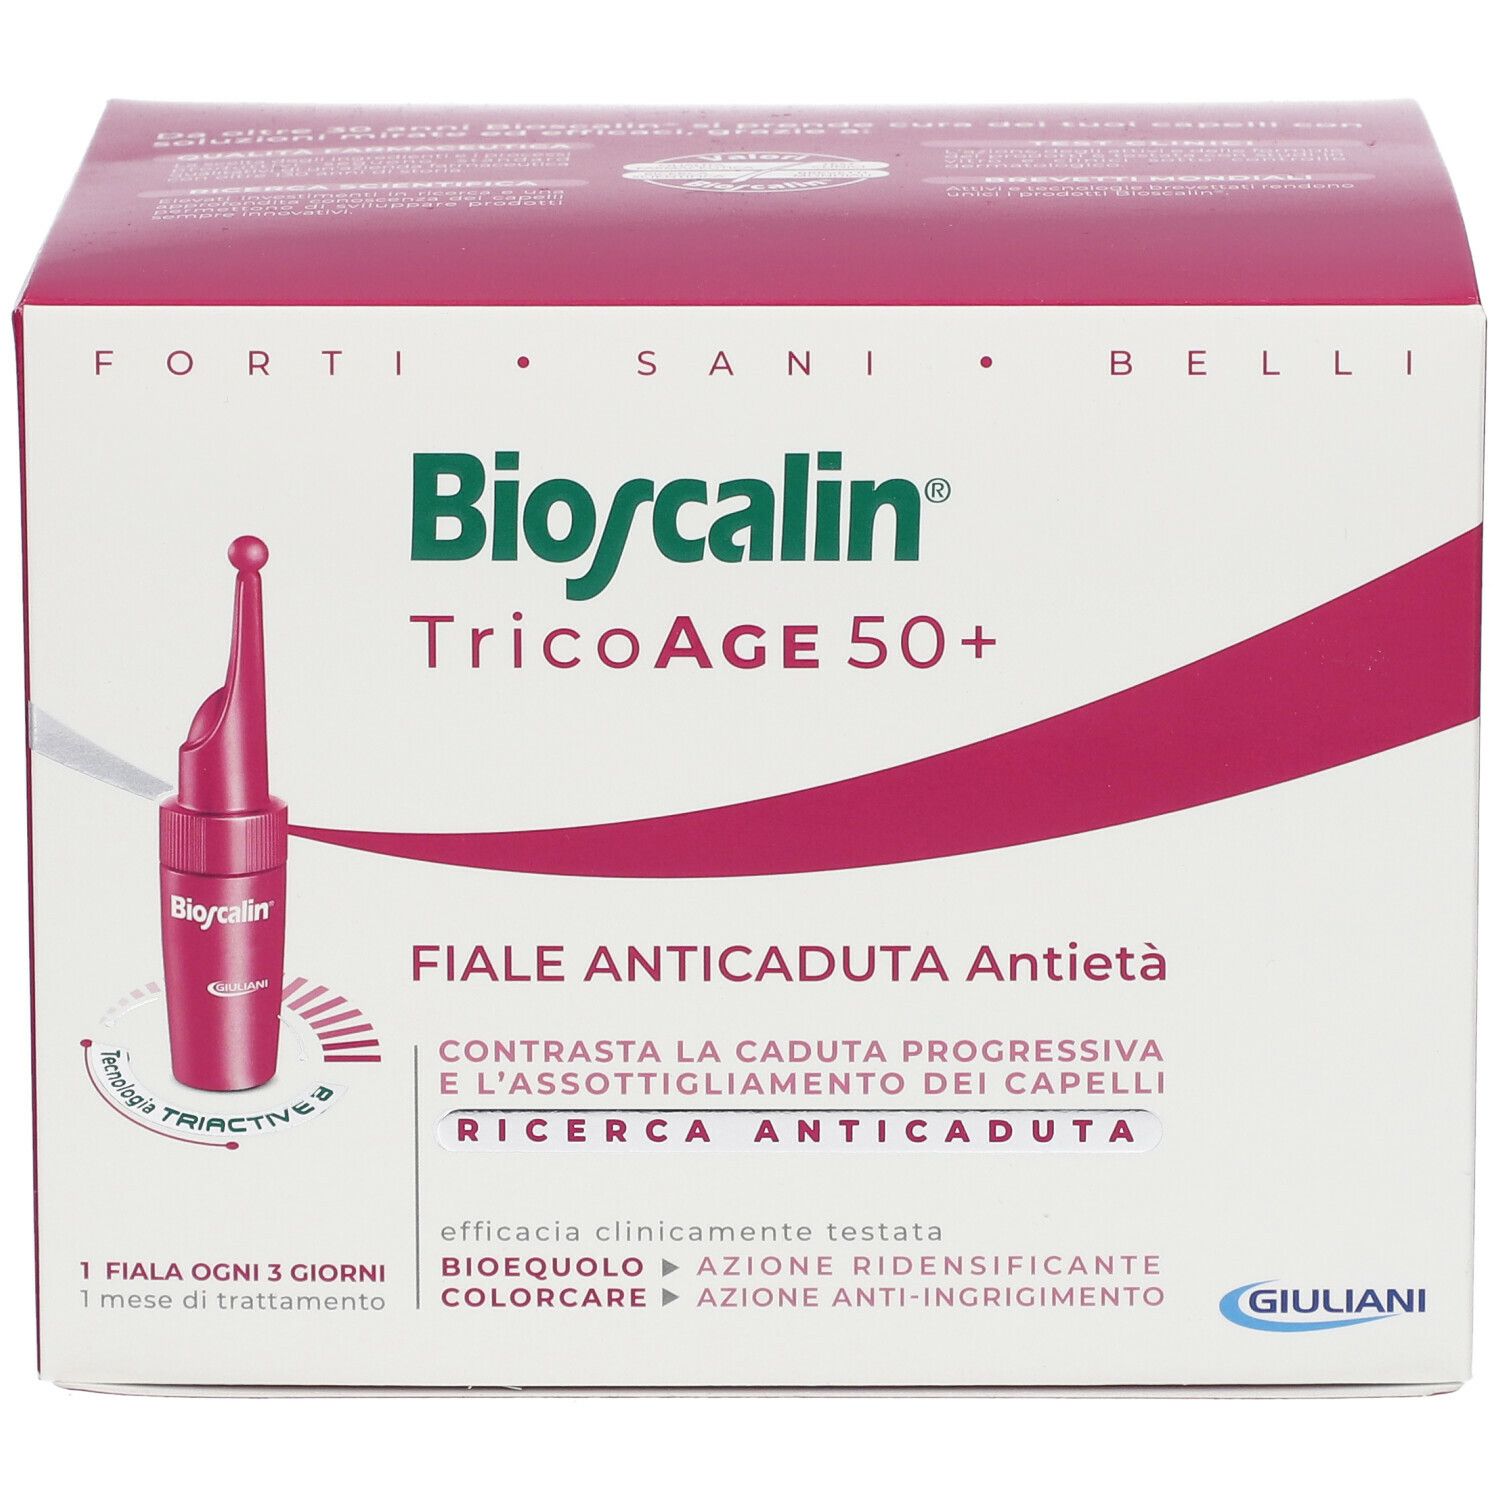 Bioscalin® TricoAGE 50+ Fiale Anticaduta Antietà